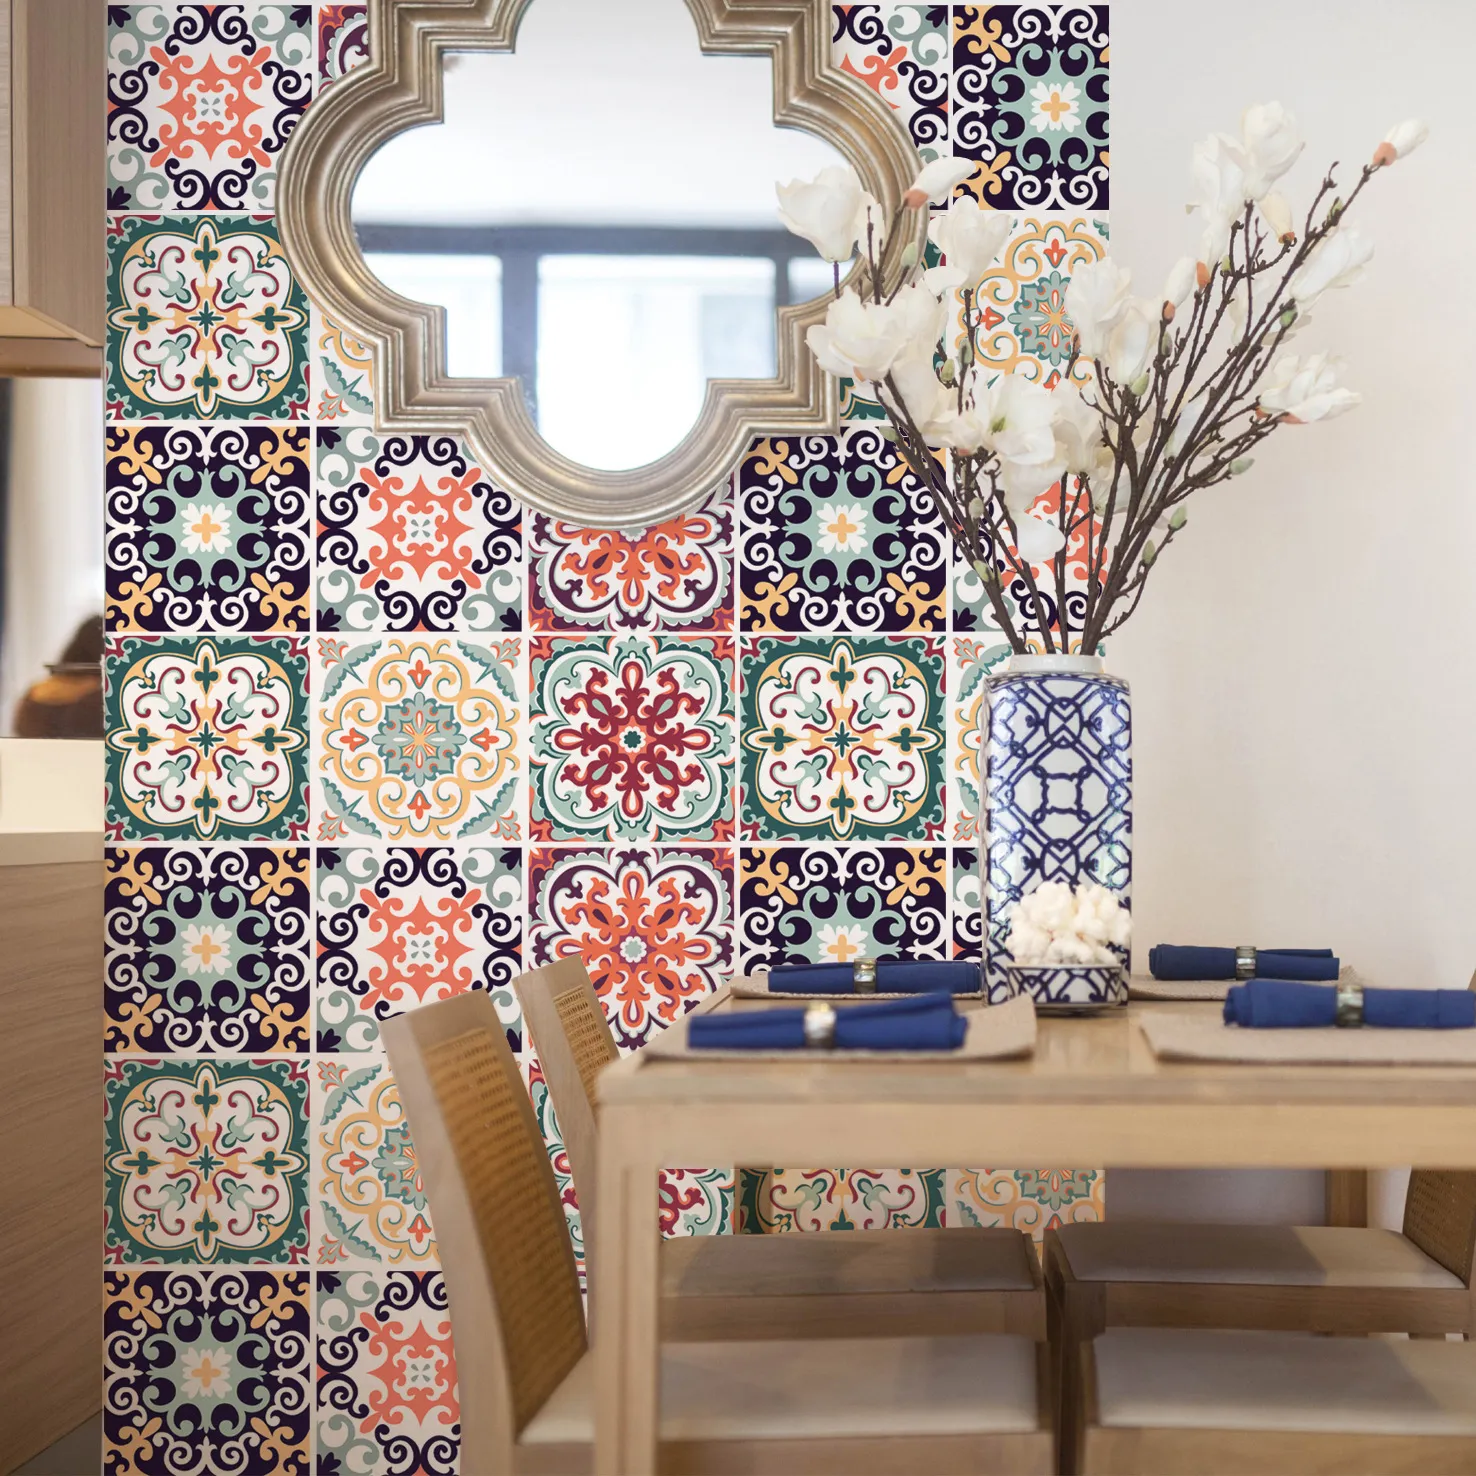 Elegant blommig kakel klistermärke pvc kök badrum vägg dekor rum dekoration 6 paneler per set hus dekal